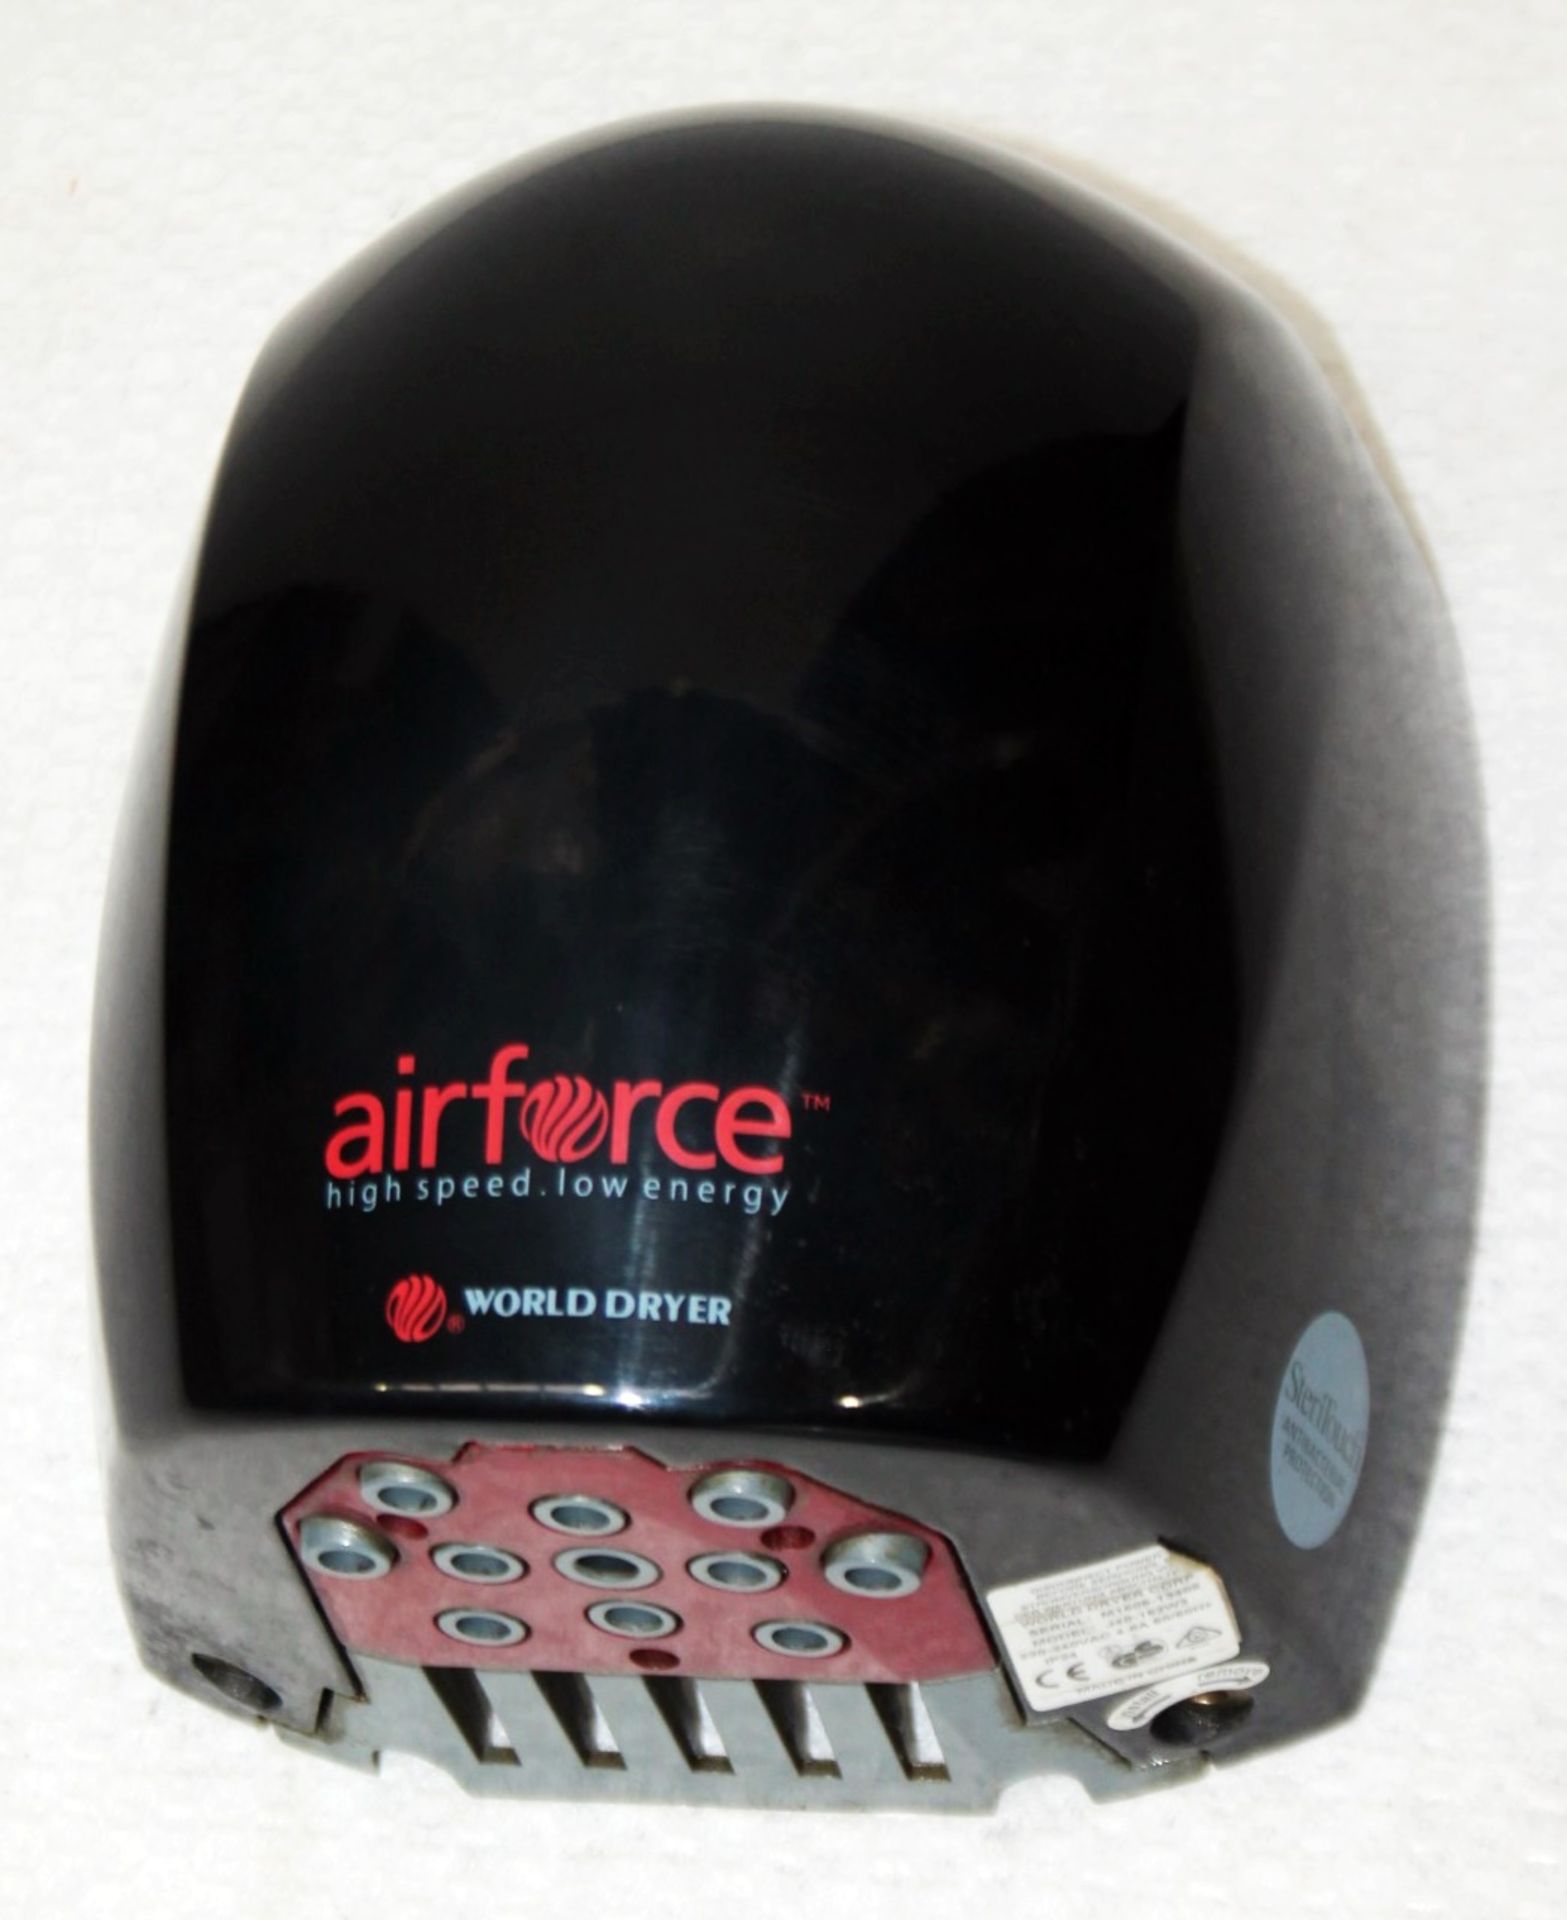 1 x Warner Howard 'Airforce' Commercial Hand Dryer In Black - Original RRP £391.00 - CL805 - - Image 2 of 5